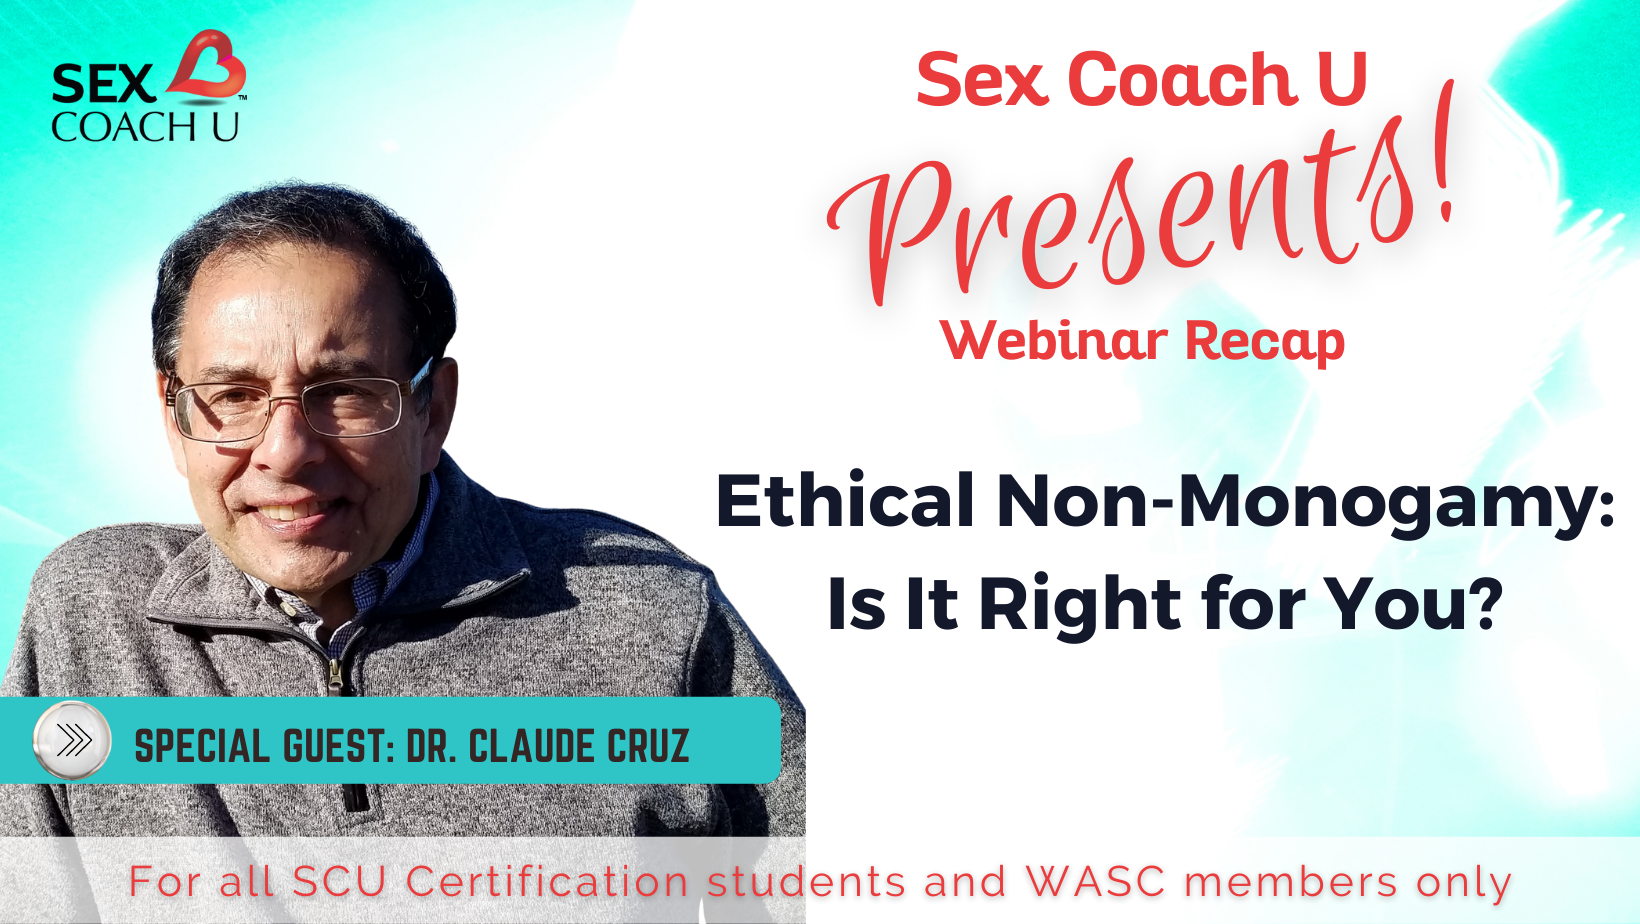 Dr Claude Cruz, ethical non-monogamy, monogamous, relationship, sex coaching, tips, advice, sexual health